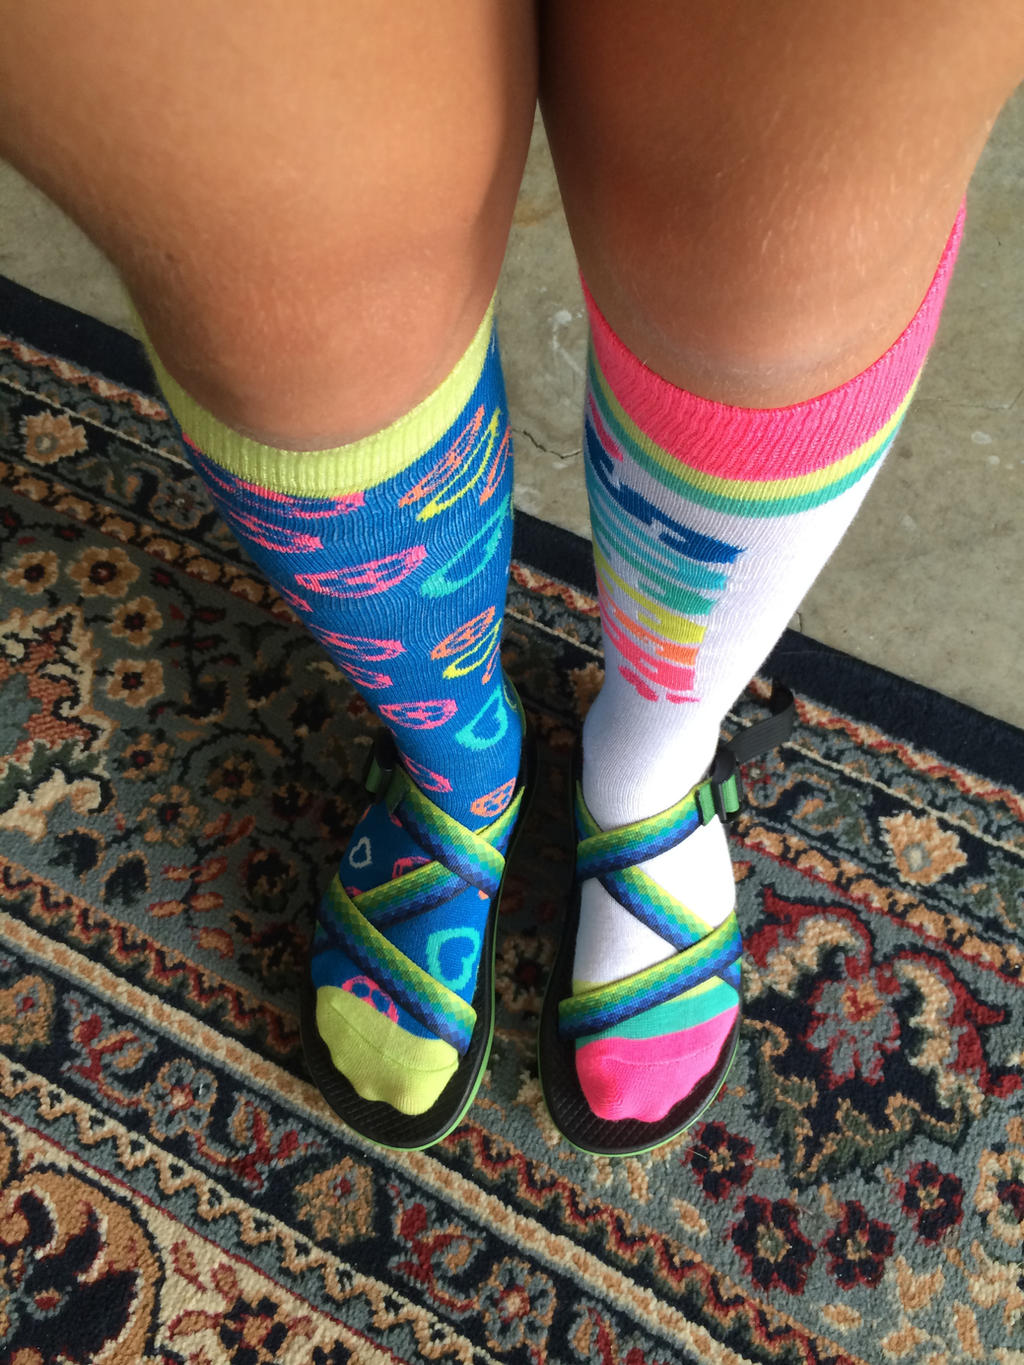 Emily's Socks by JosephThomas on DeviantArt